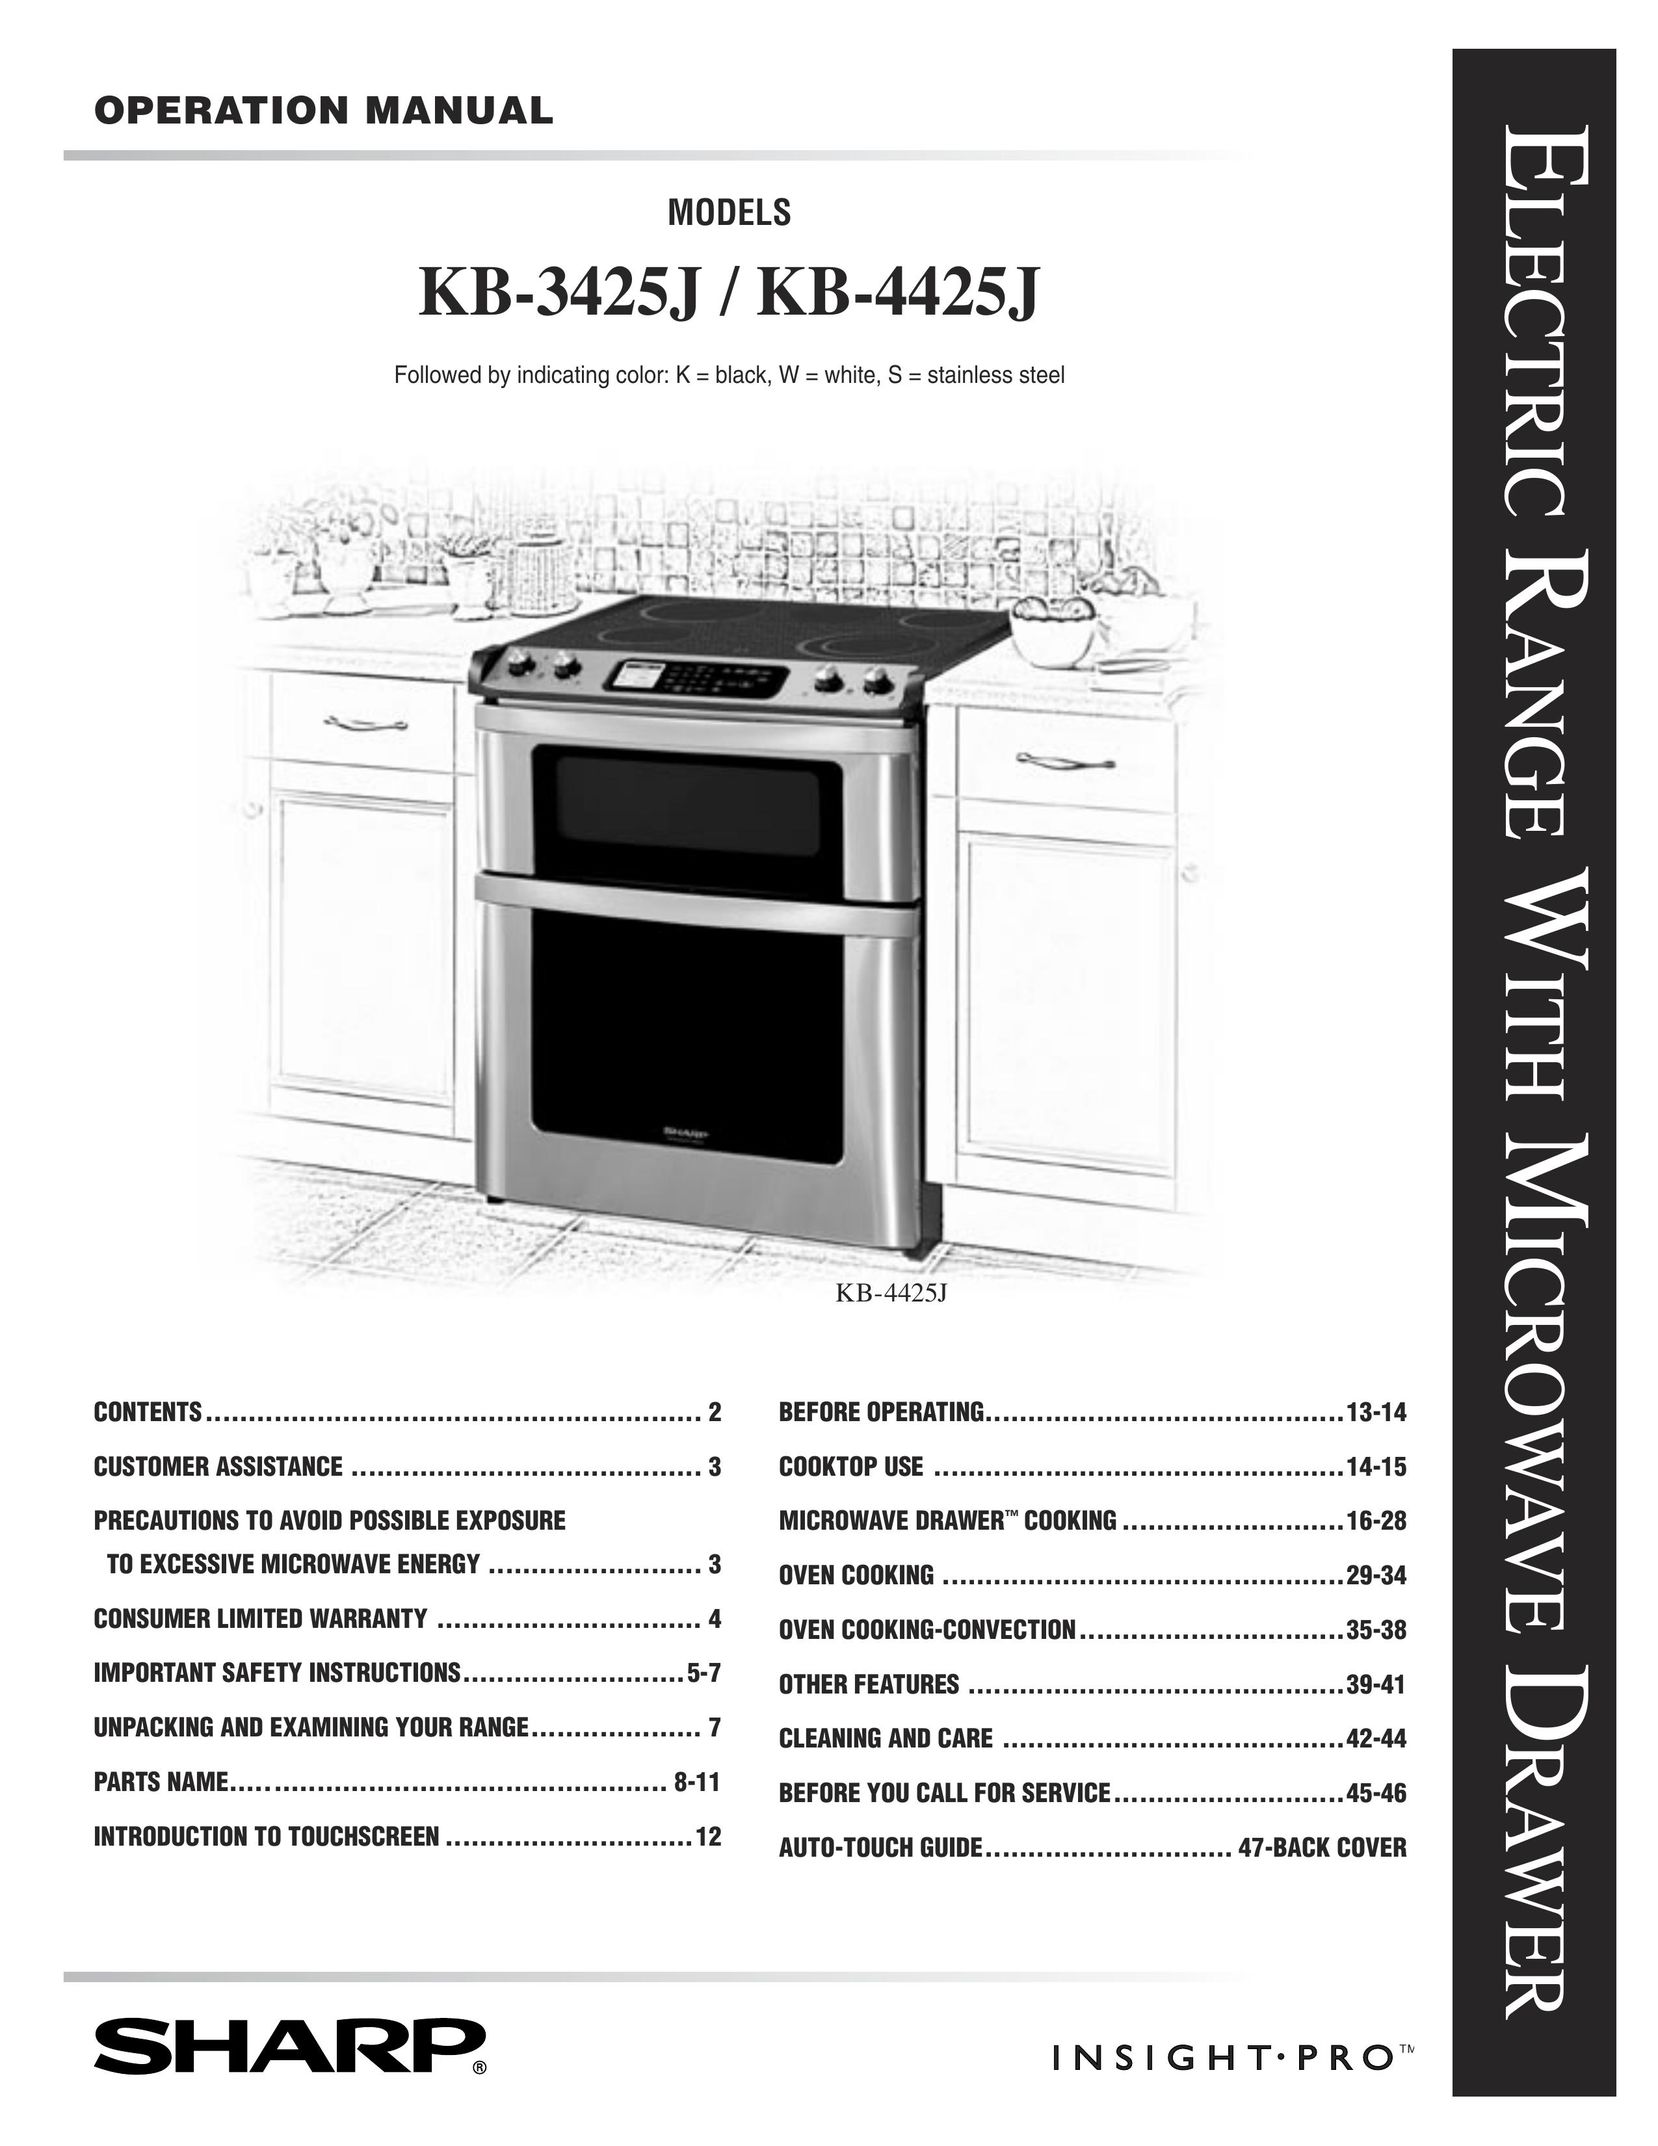 Sharp KB-3425J Range User Manual